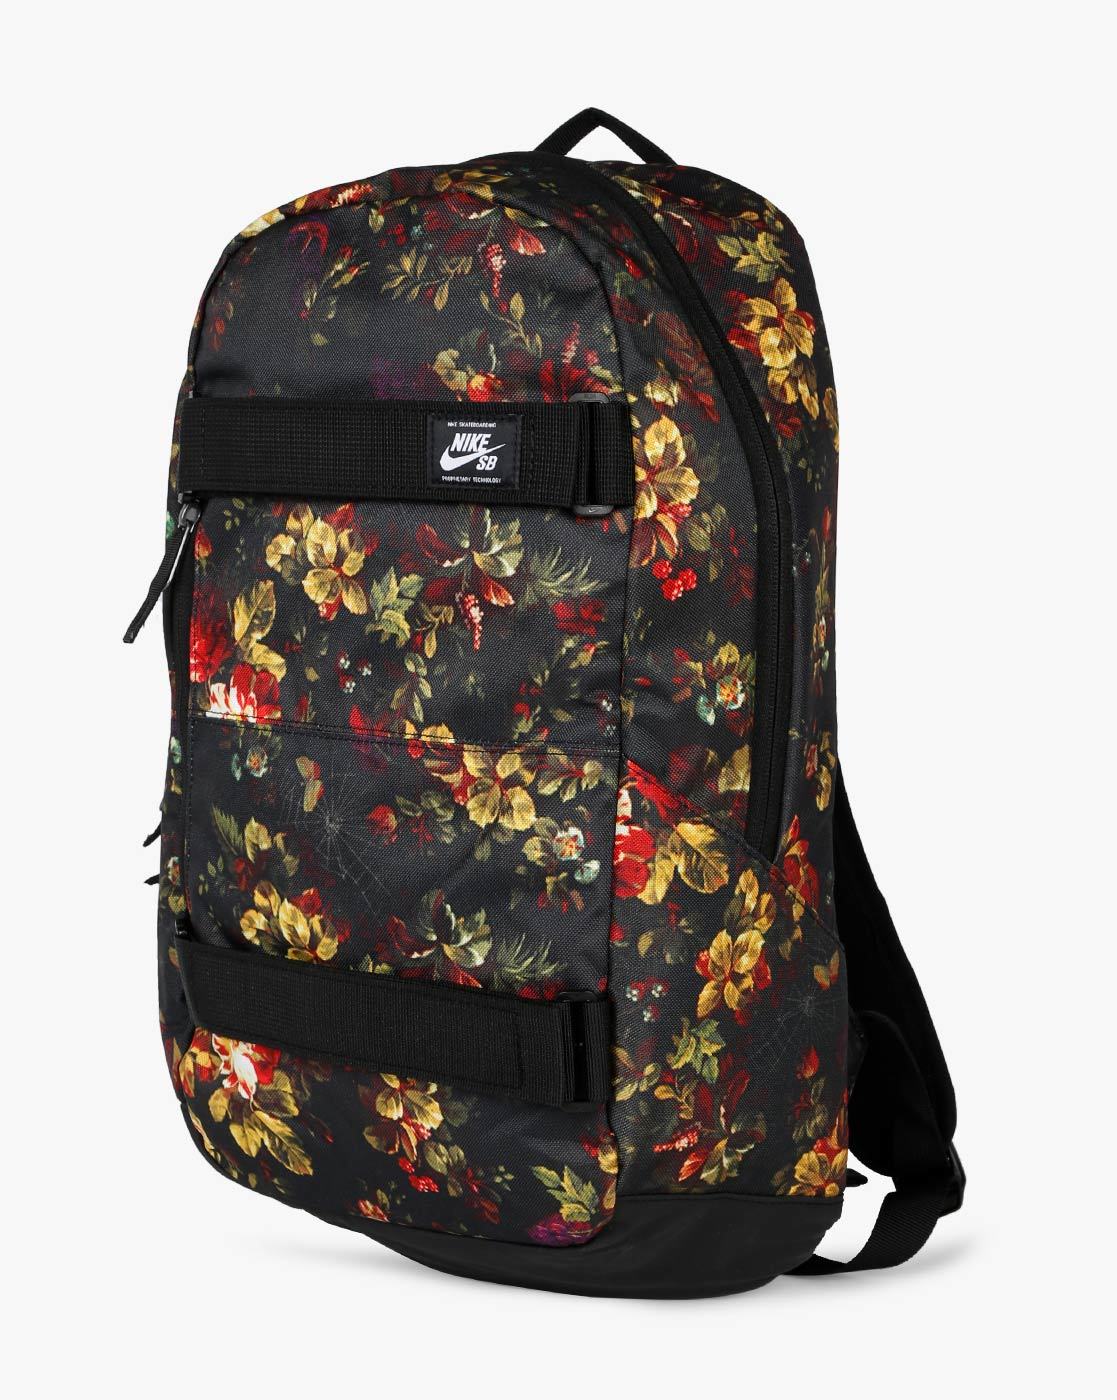 صحة ينزف سوريكينمو Nike Sb Backpack Floral Jacksonvelosports Com